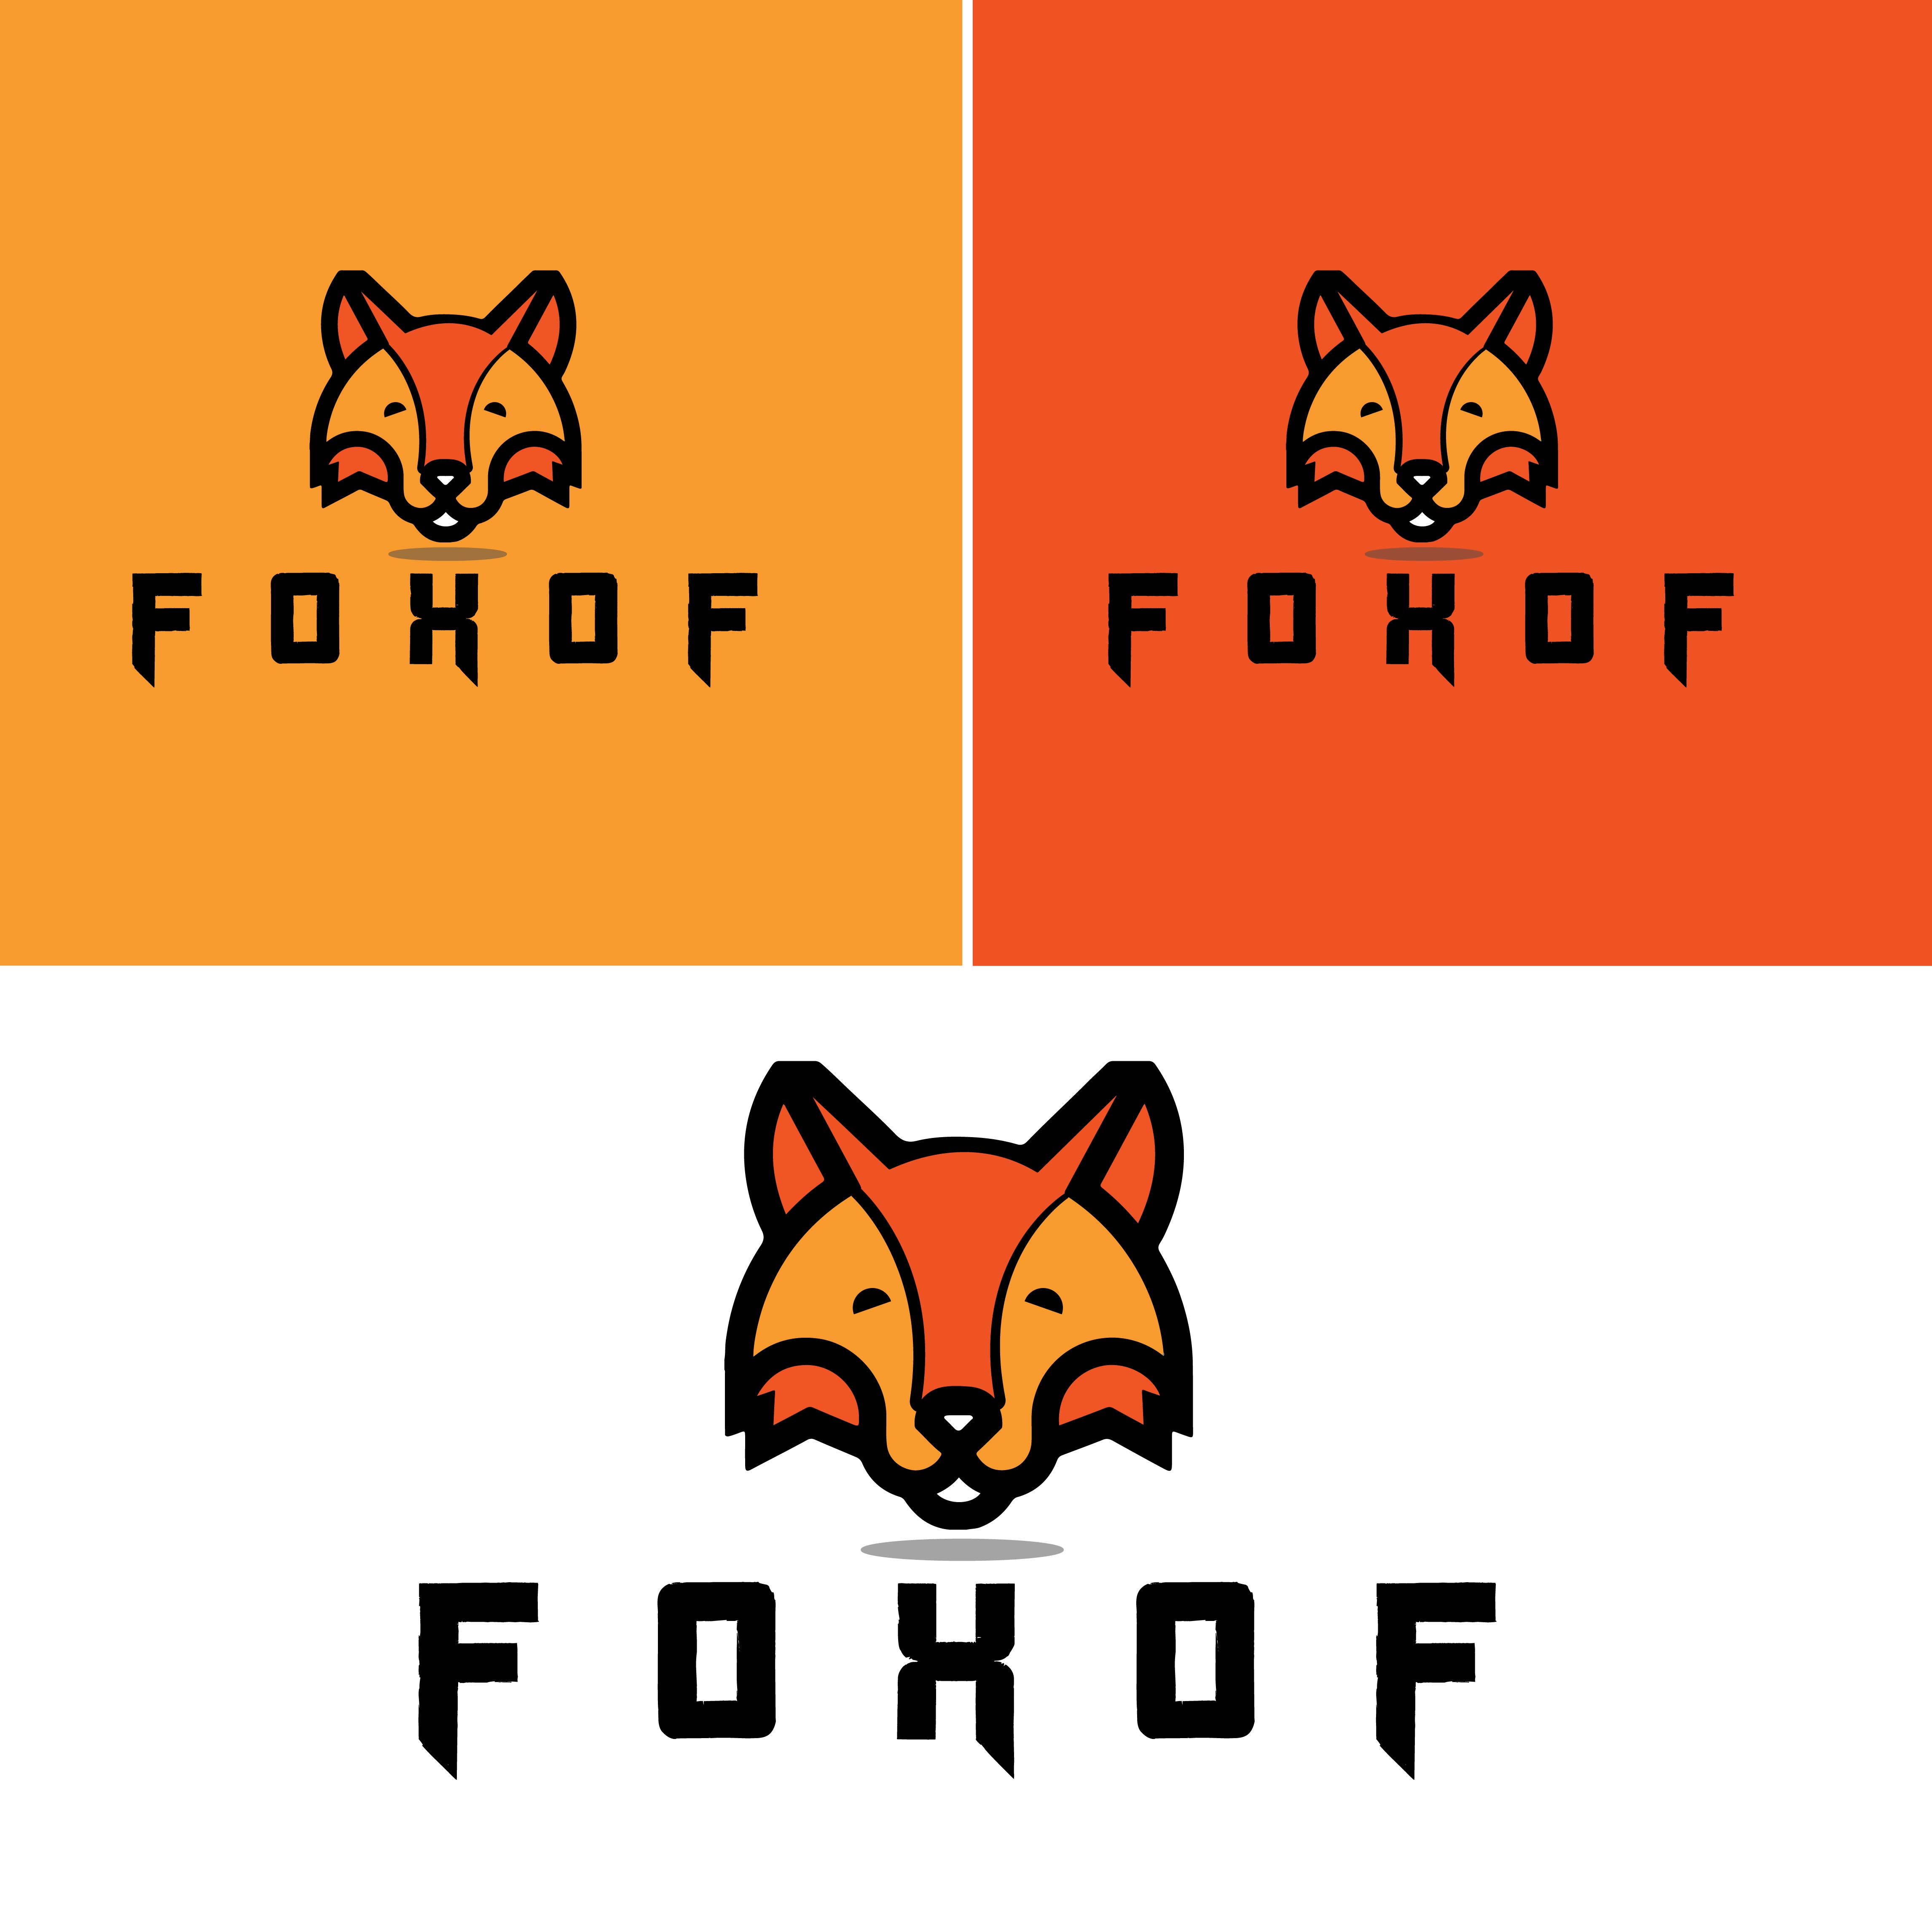 Foxof logo design/ animal logo cover image.